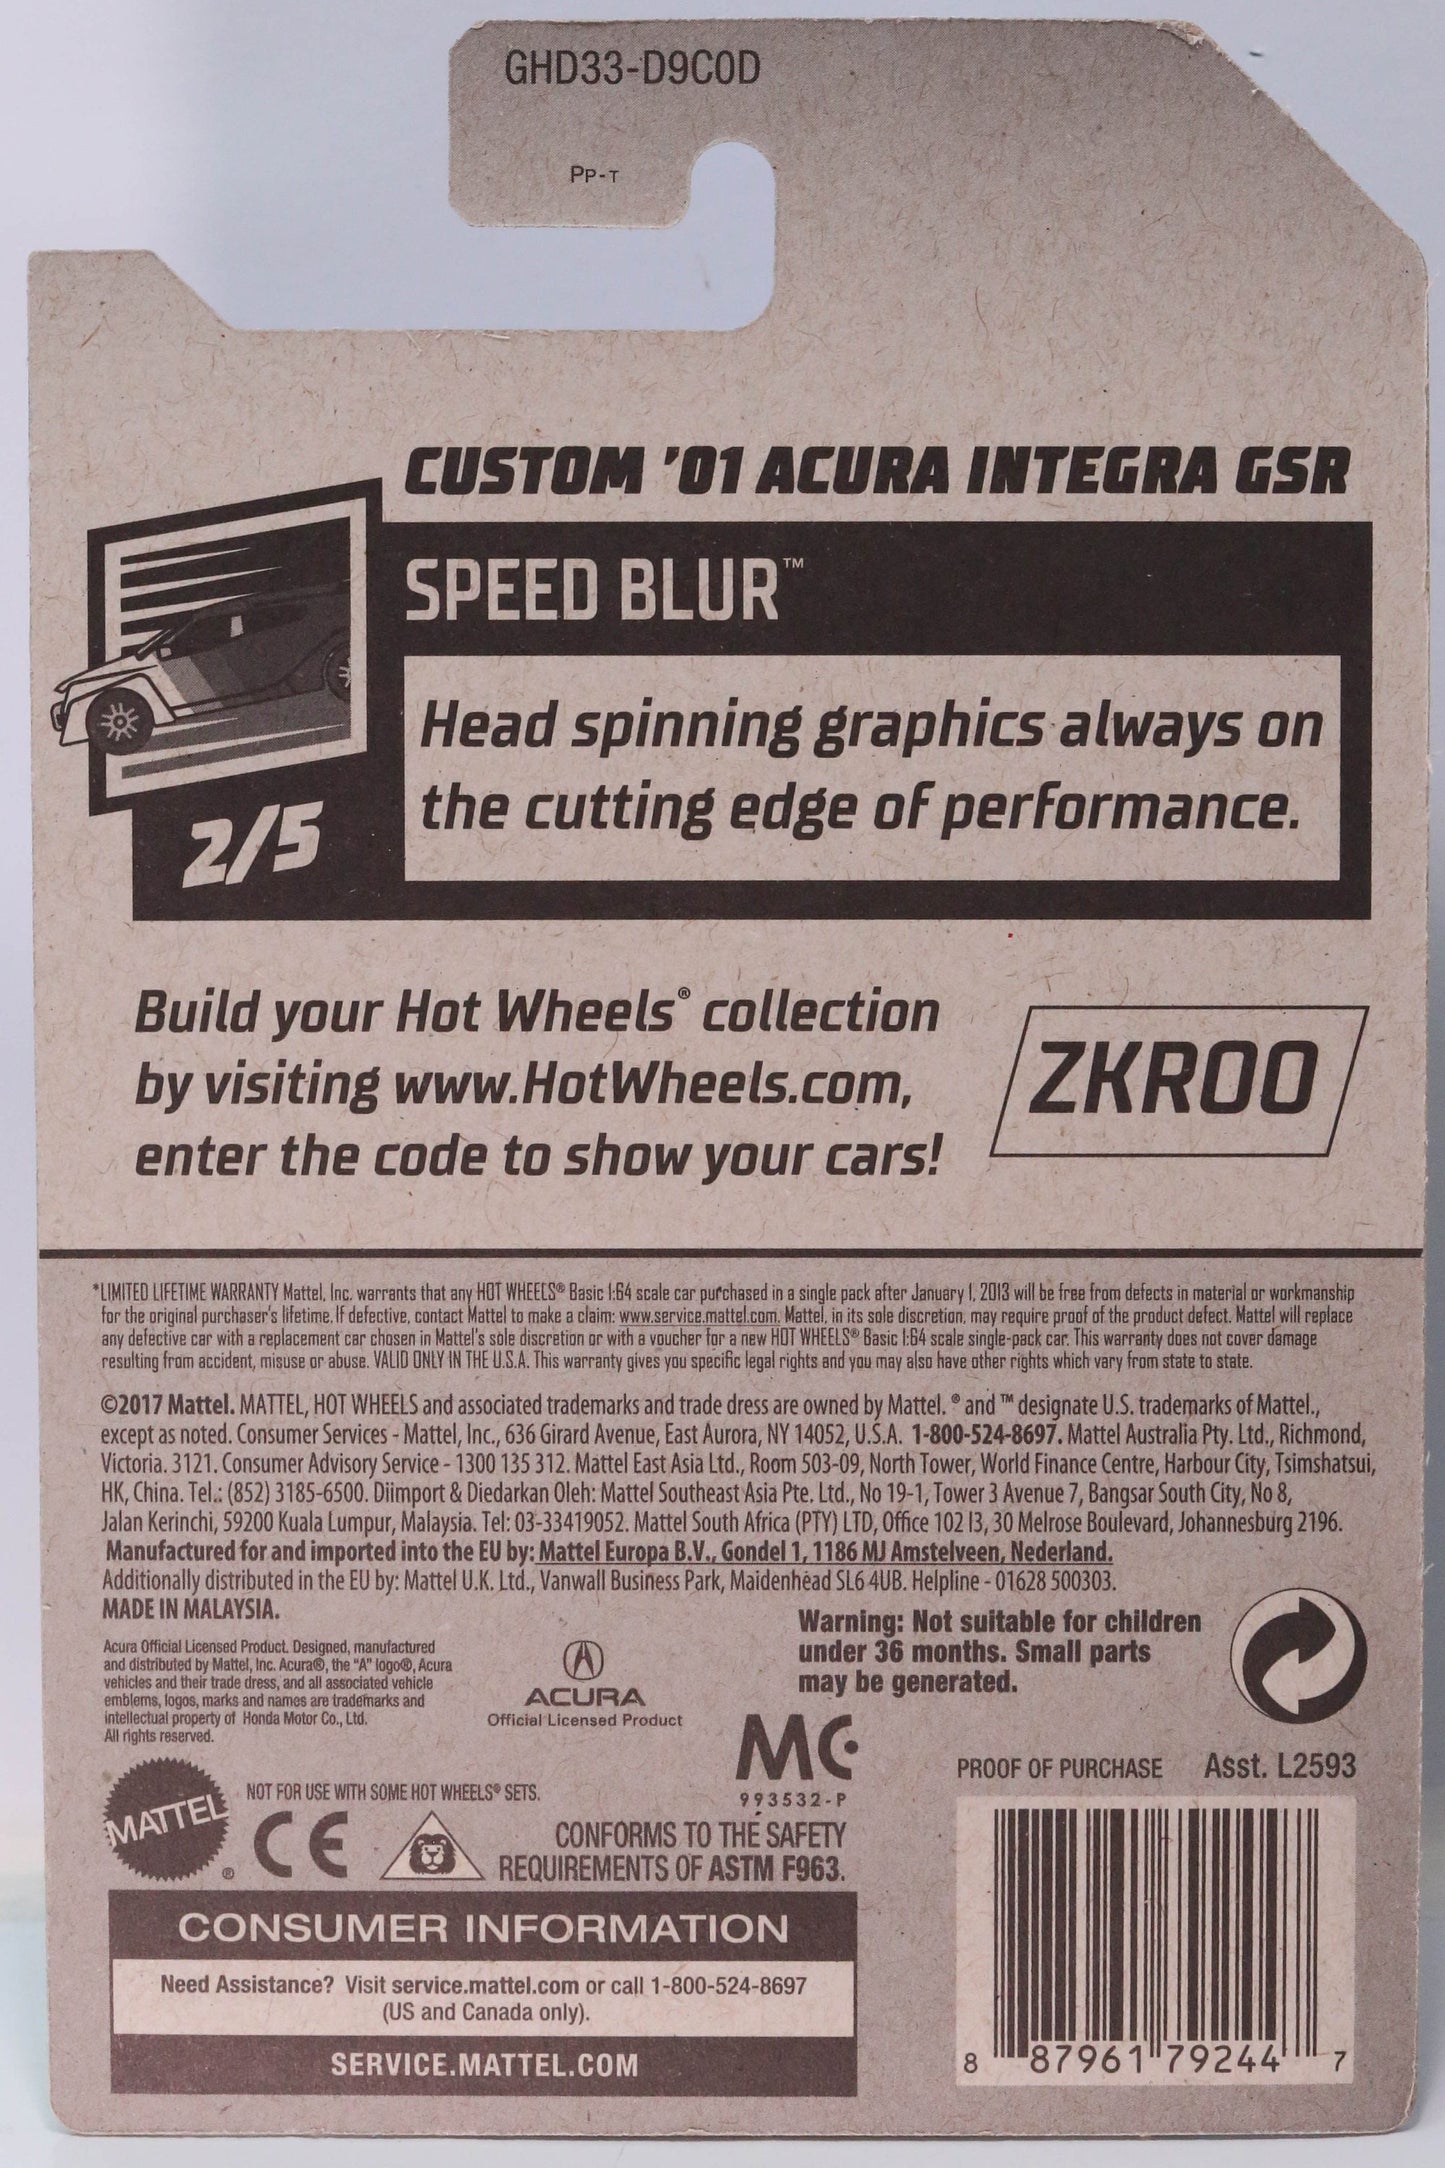 Hot Wheels Custom '01 Acura Integra GSR HW Speed Blur GHD33 - Plus (+) a Bonus Hot Wheel